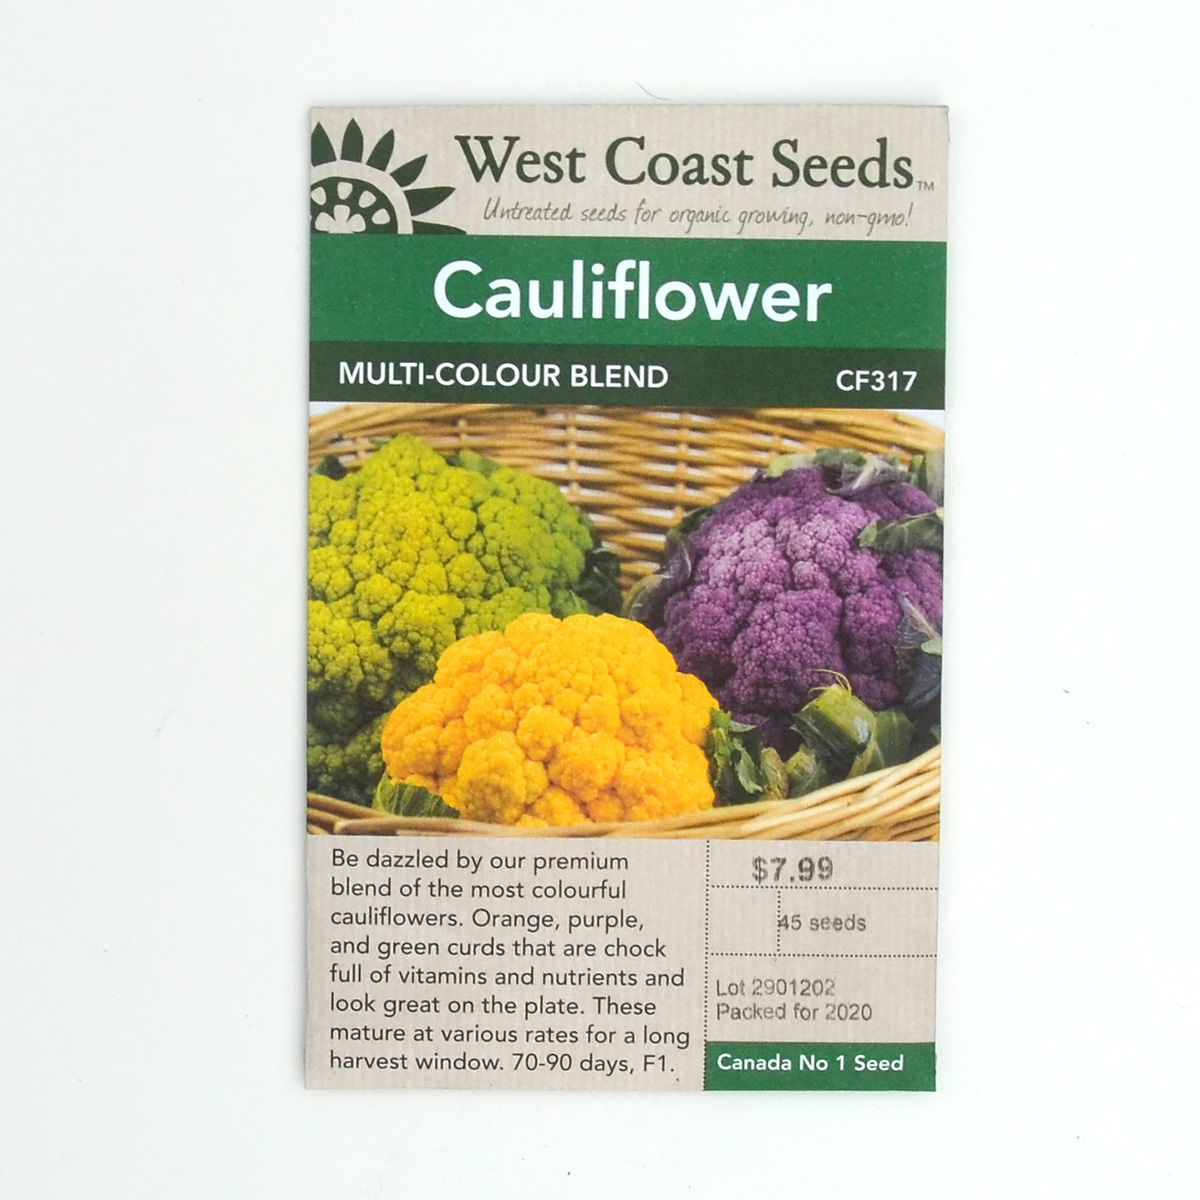 WCS_Cauliflower_MultiColourBlend.jpg